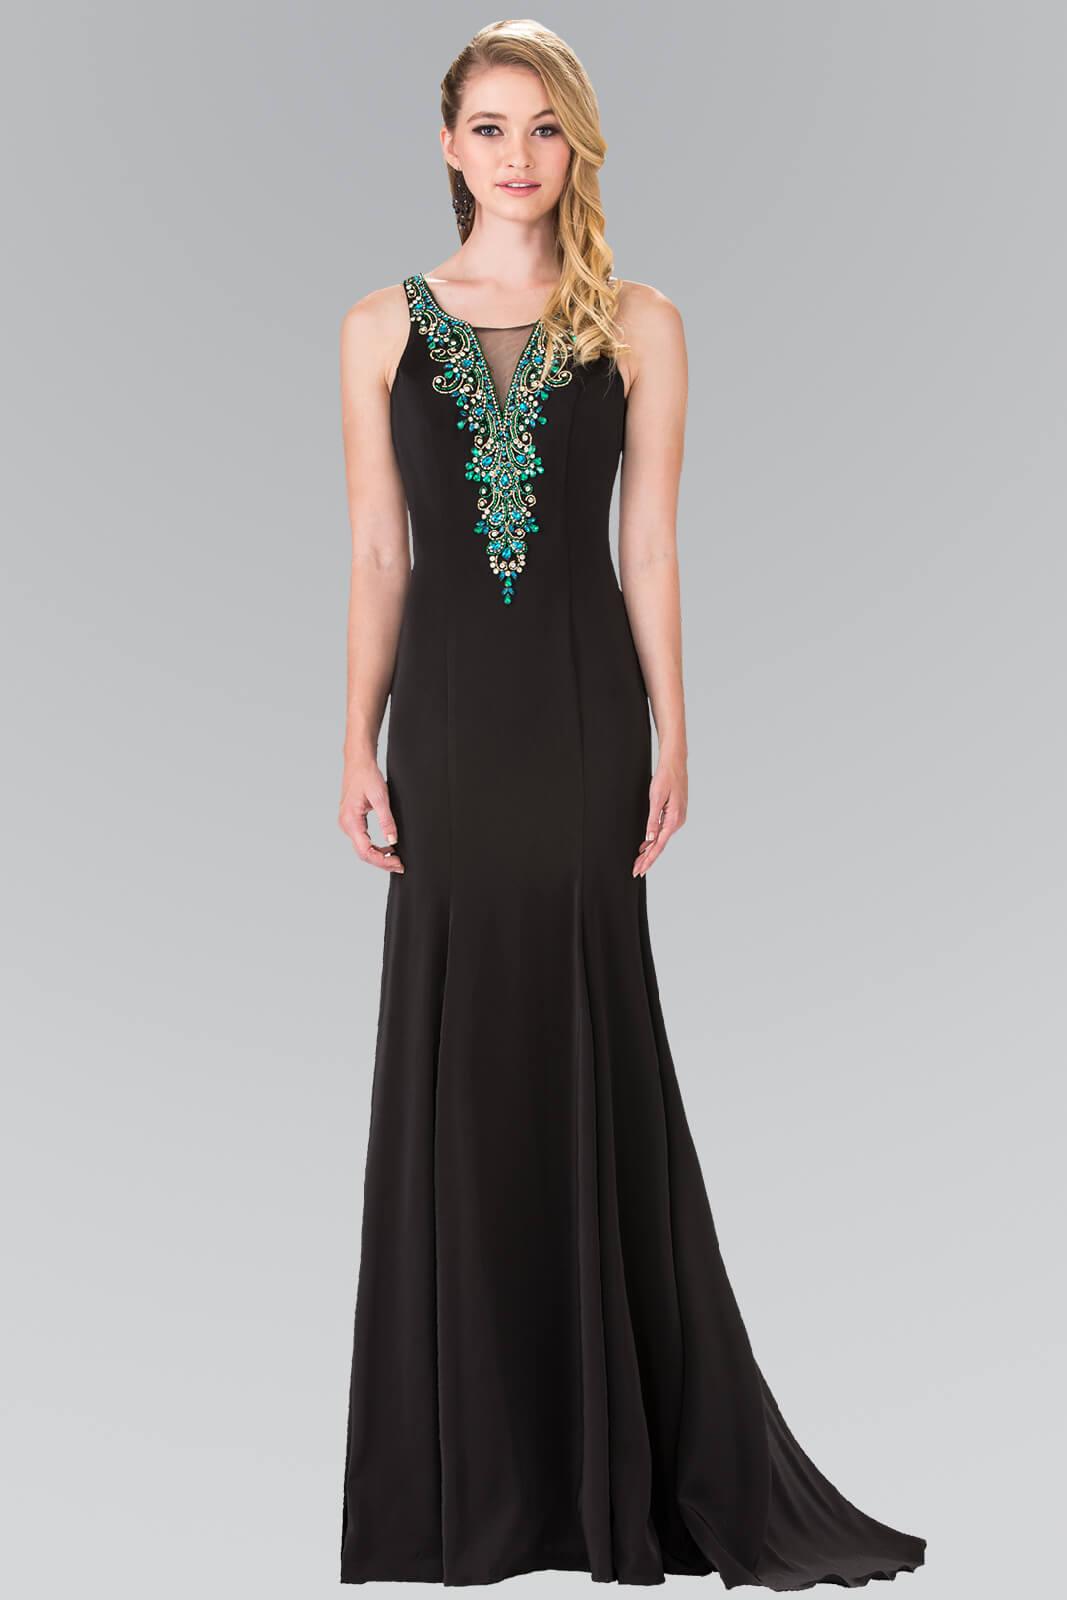 Long Sleeveless Formal Evening Prom Dress - The Dress Outlet Elizabeth K